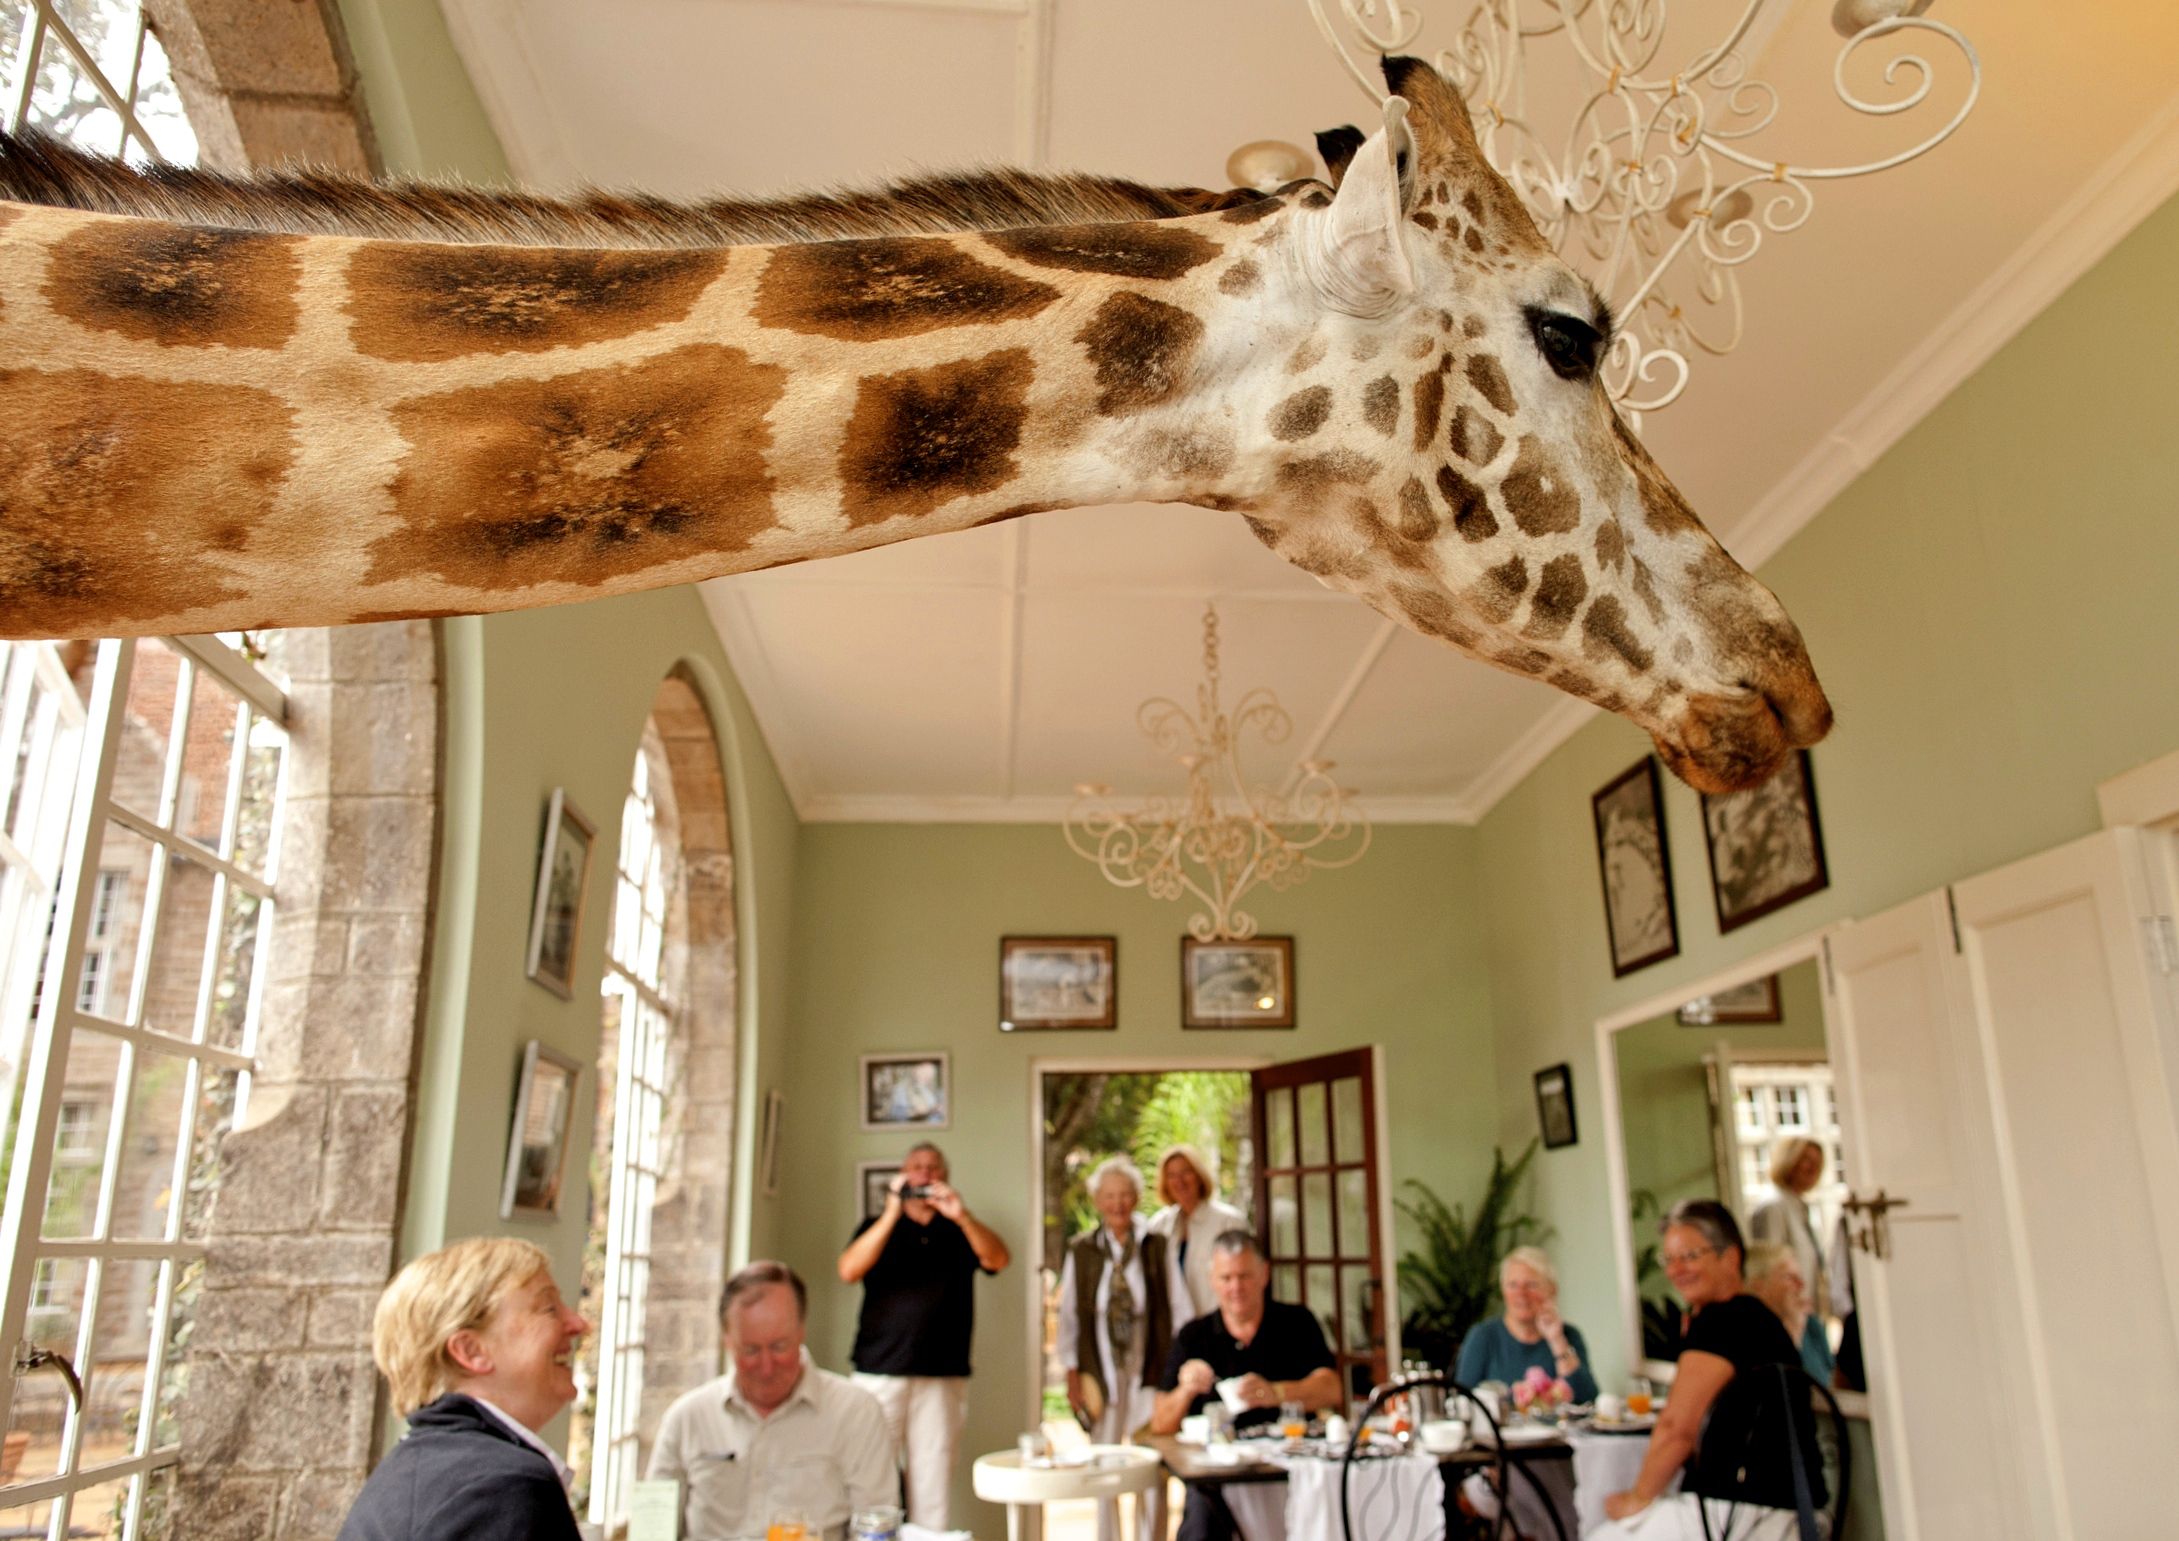 Hotels with Pets - Giraffes Iguanas Weird Animals